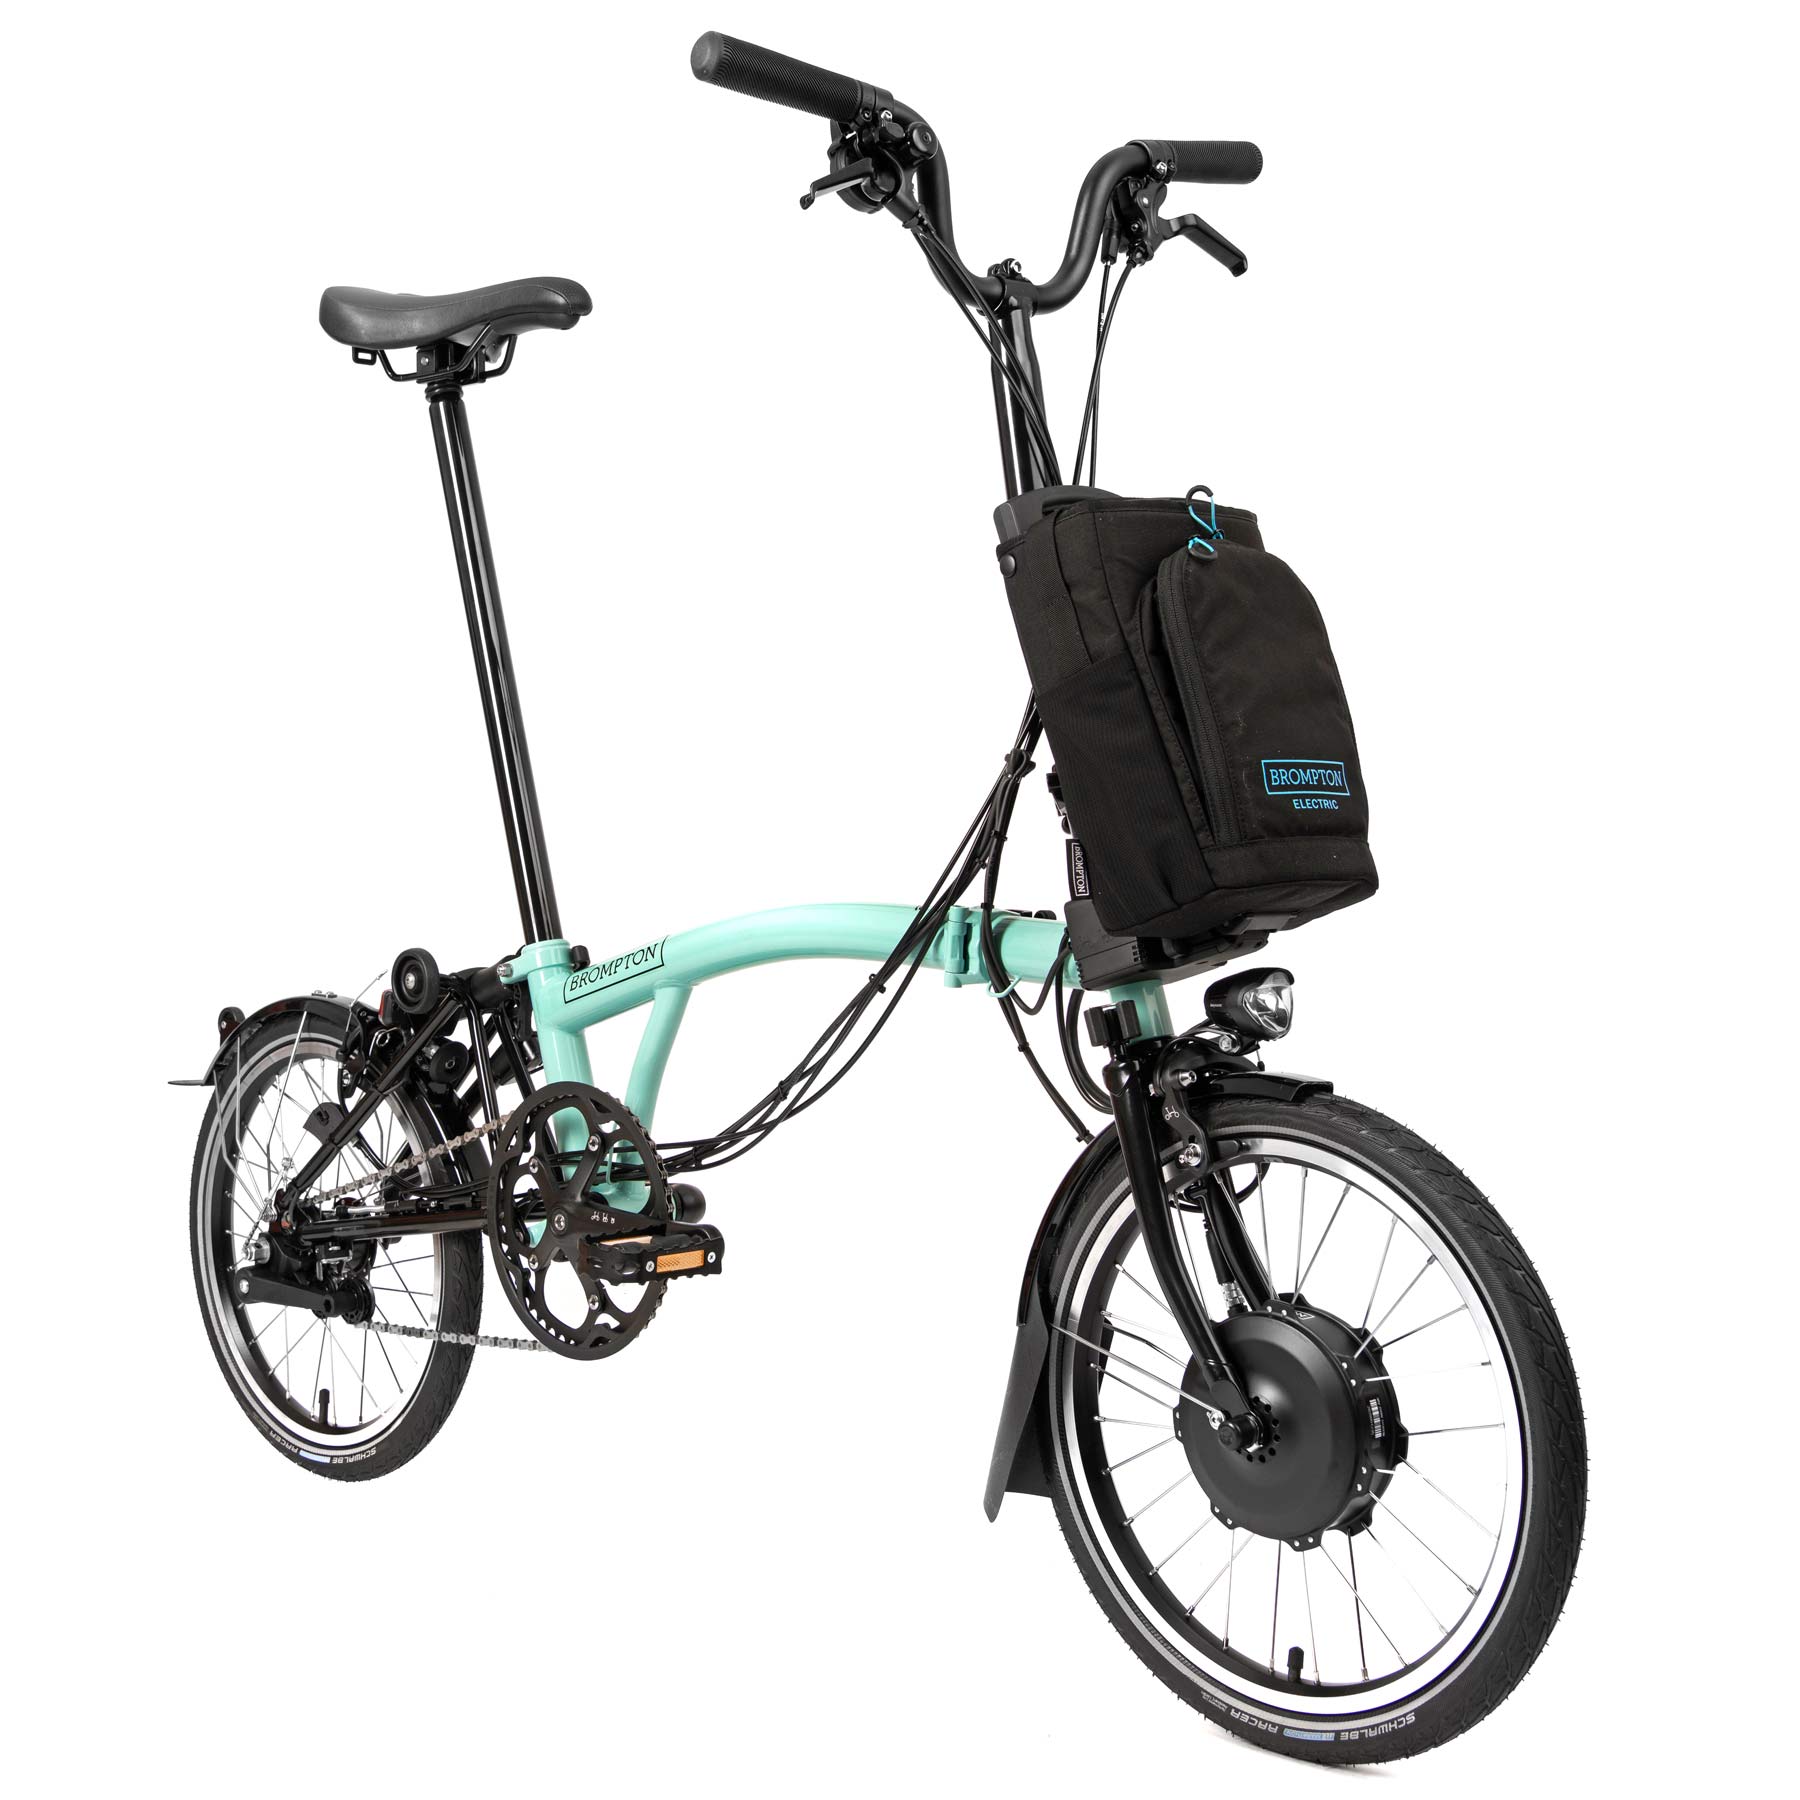 2022 Brompton compact folding bikes, renamed simply: Electric C Line e-bike